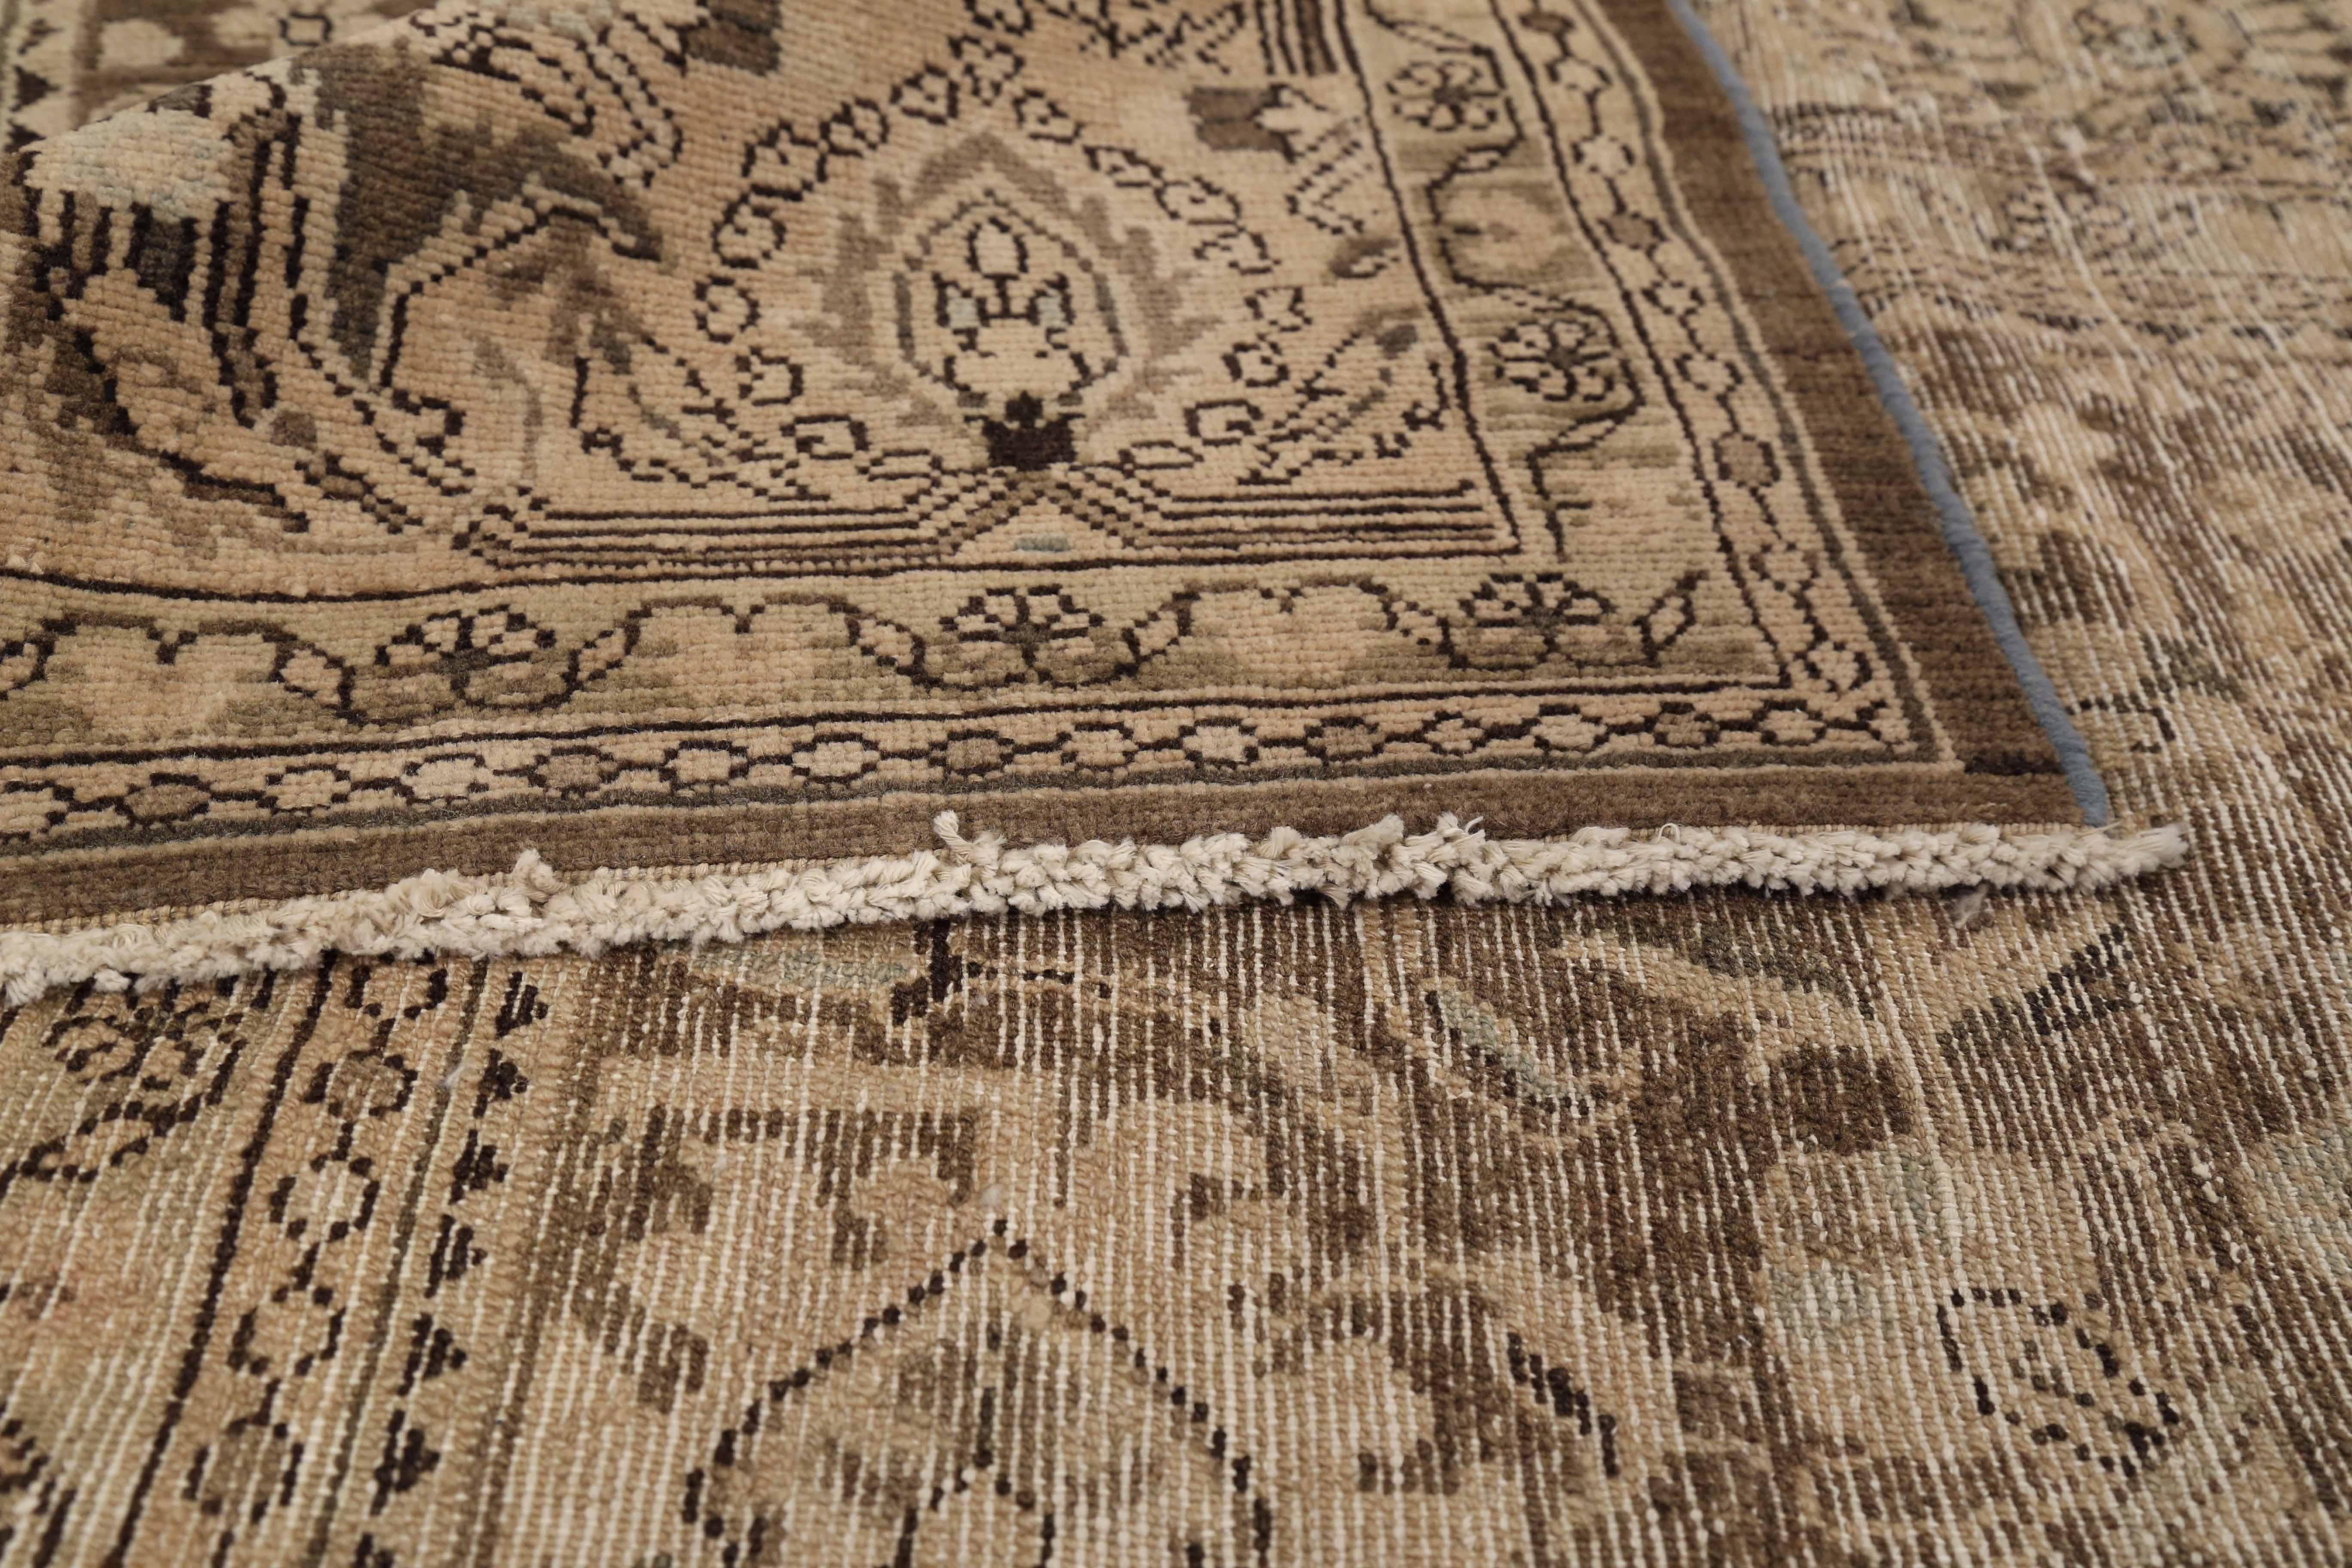 Antique Persian Area Rug Malayer Design In Excellent Condition For Sale In Dallas, TX